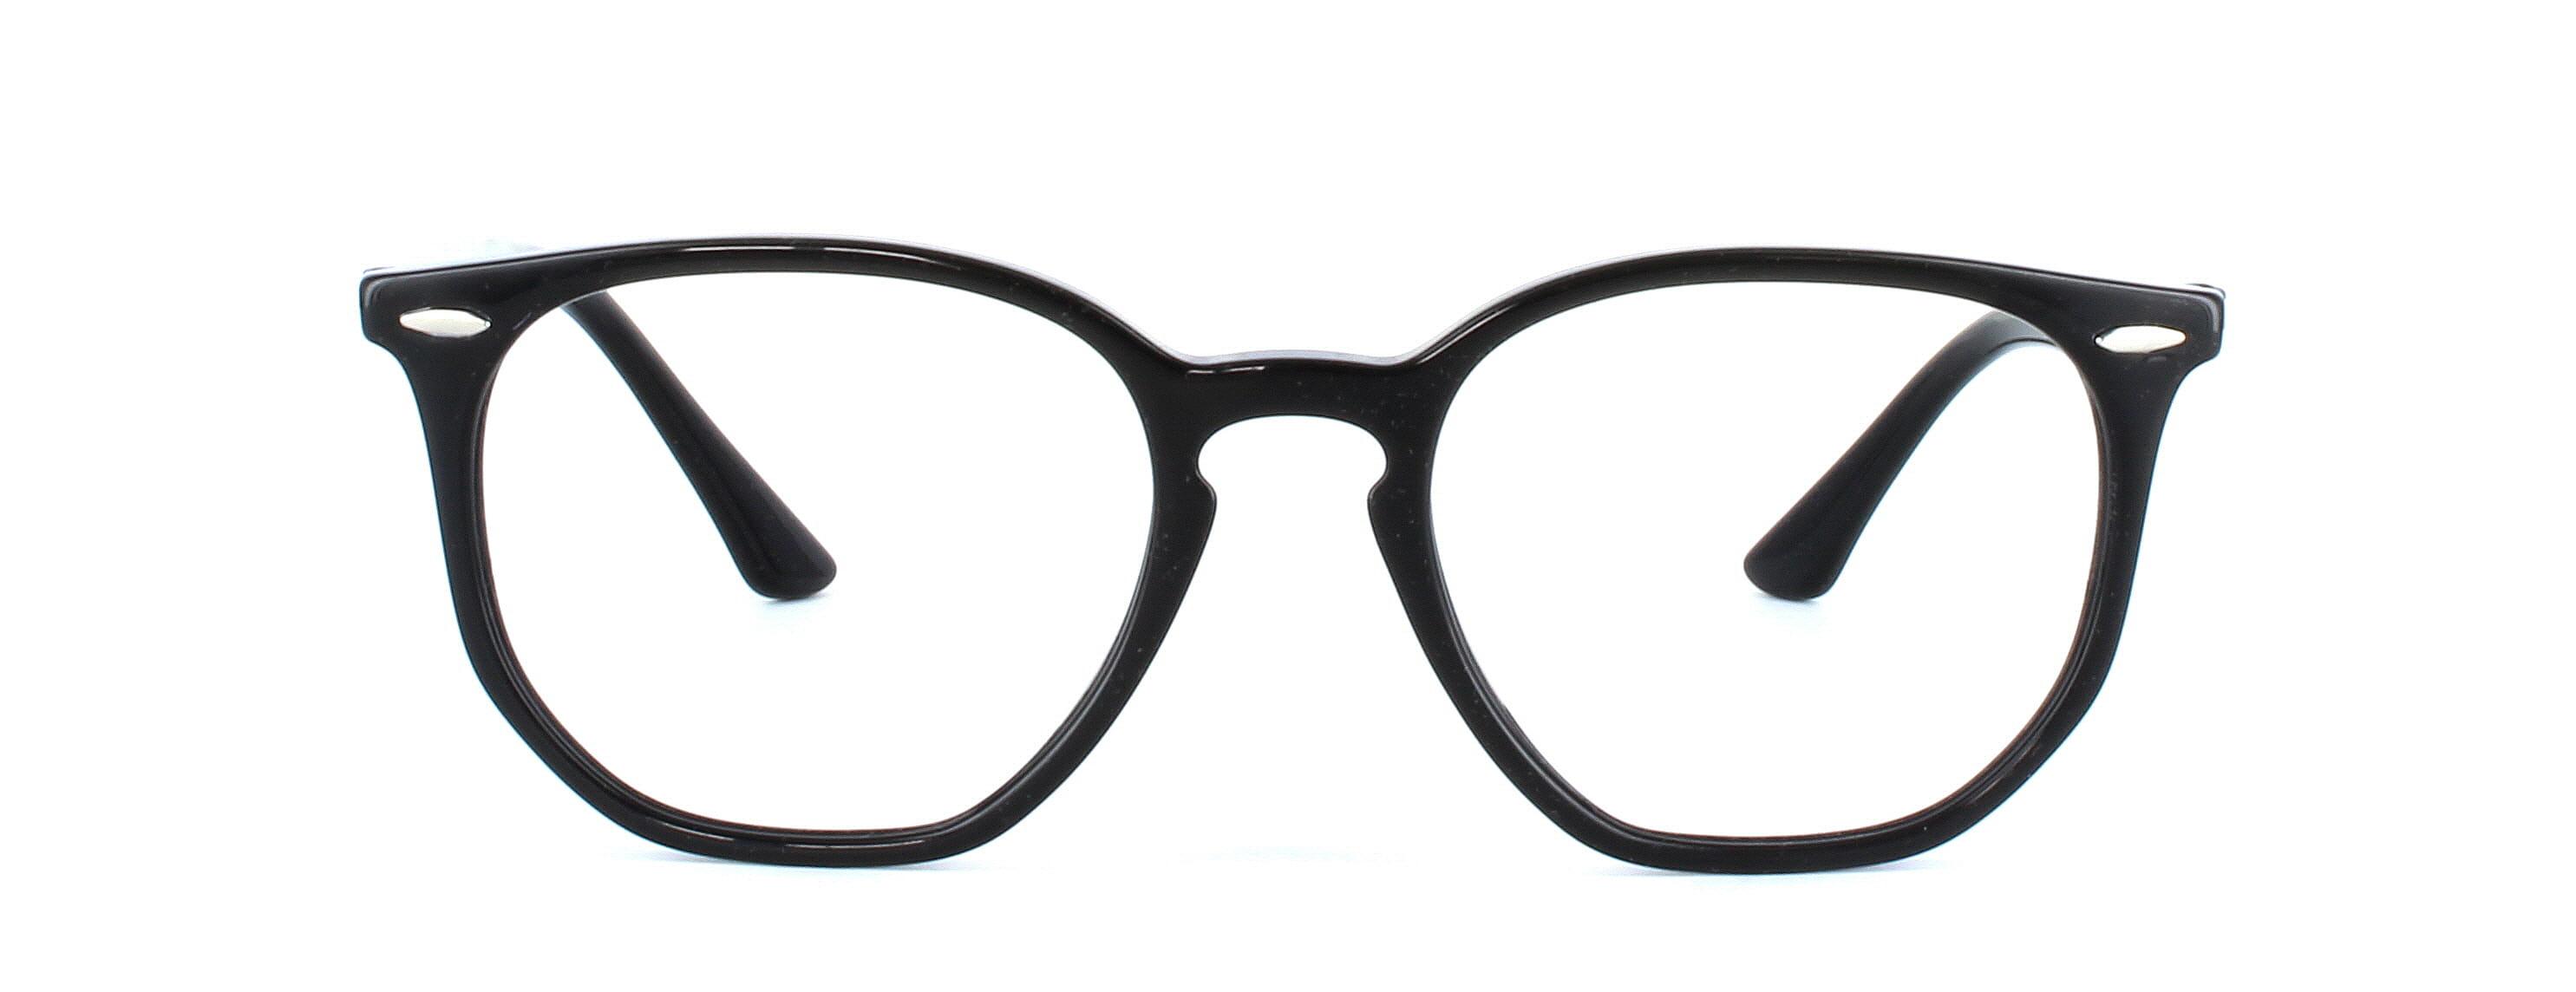 Ray Ban 7151 2000 | Designer Glasses - Black | Glasses2you